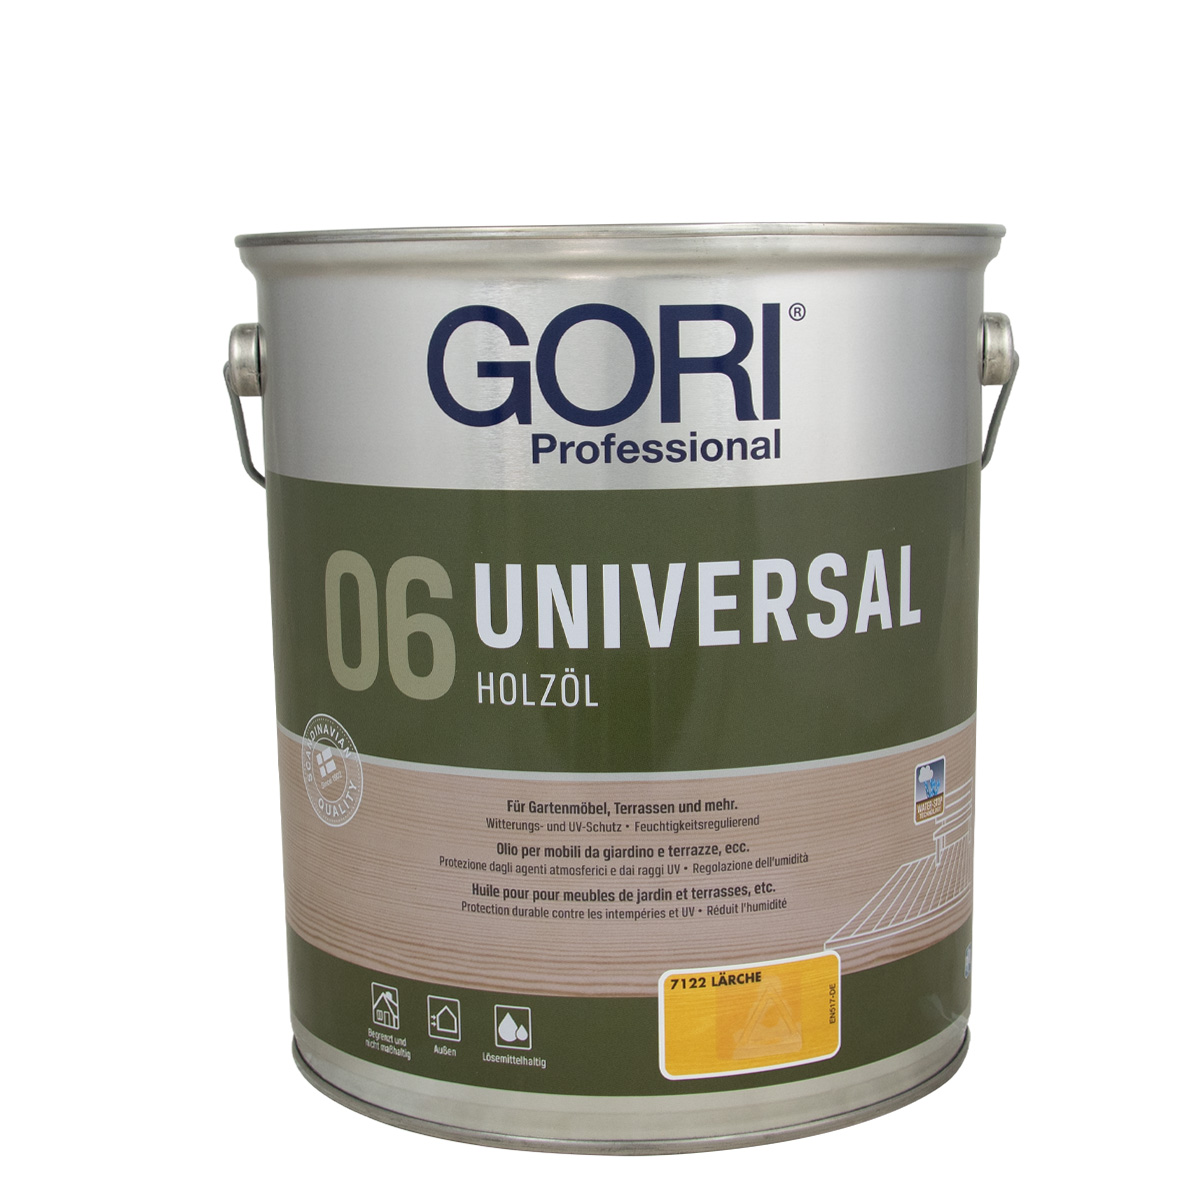 Gori 06 Universal Holzöl Lärche 7122 5L, lösemittelhaltiges Holzpflegeöl